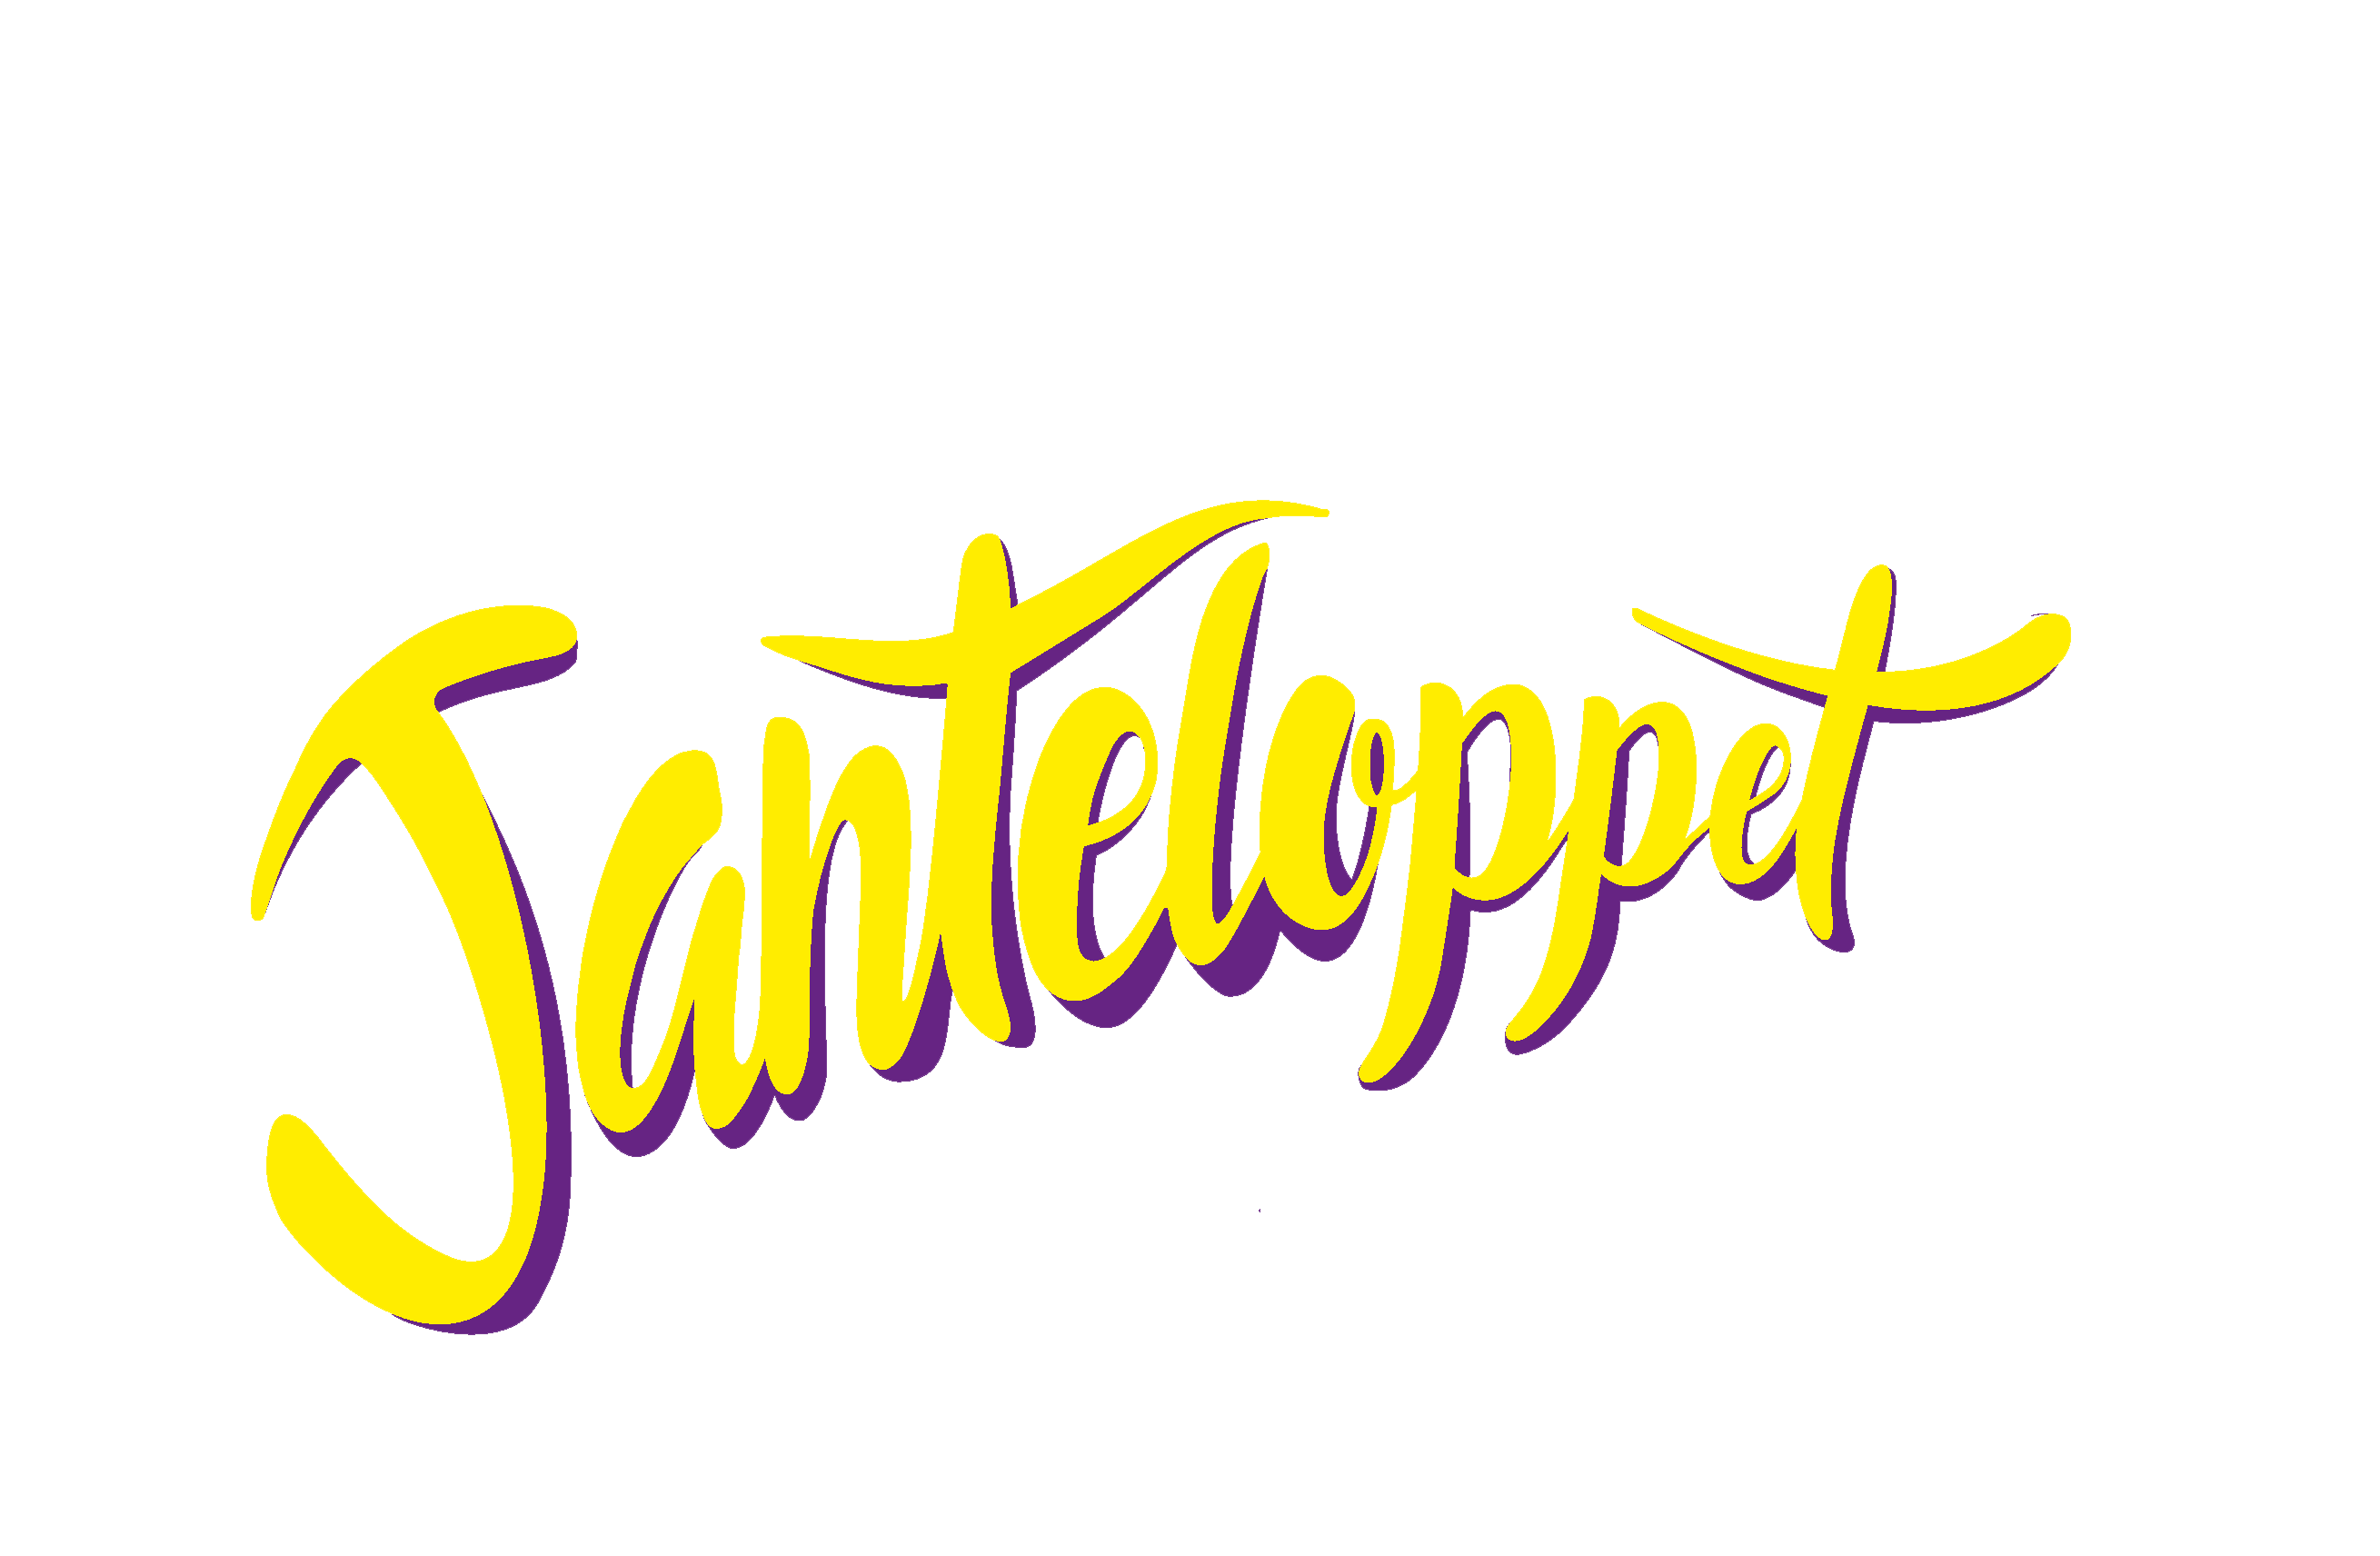 Event Logo for Ski Classics Grand Finale Janteloppet